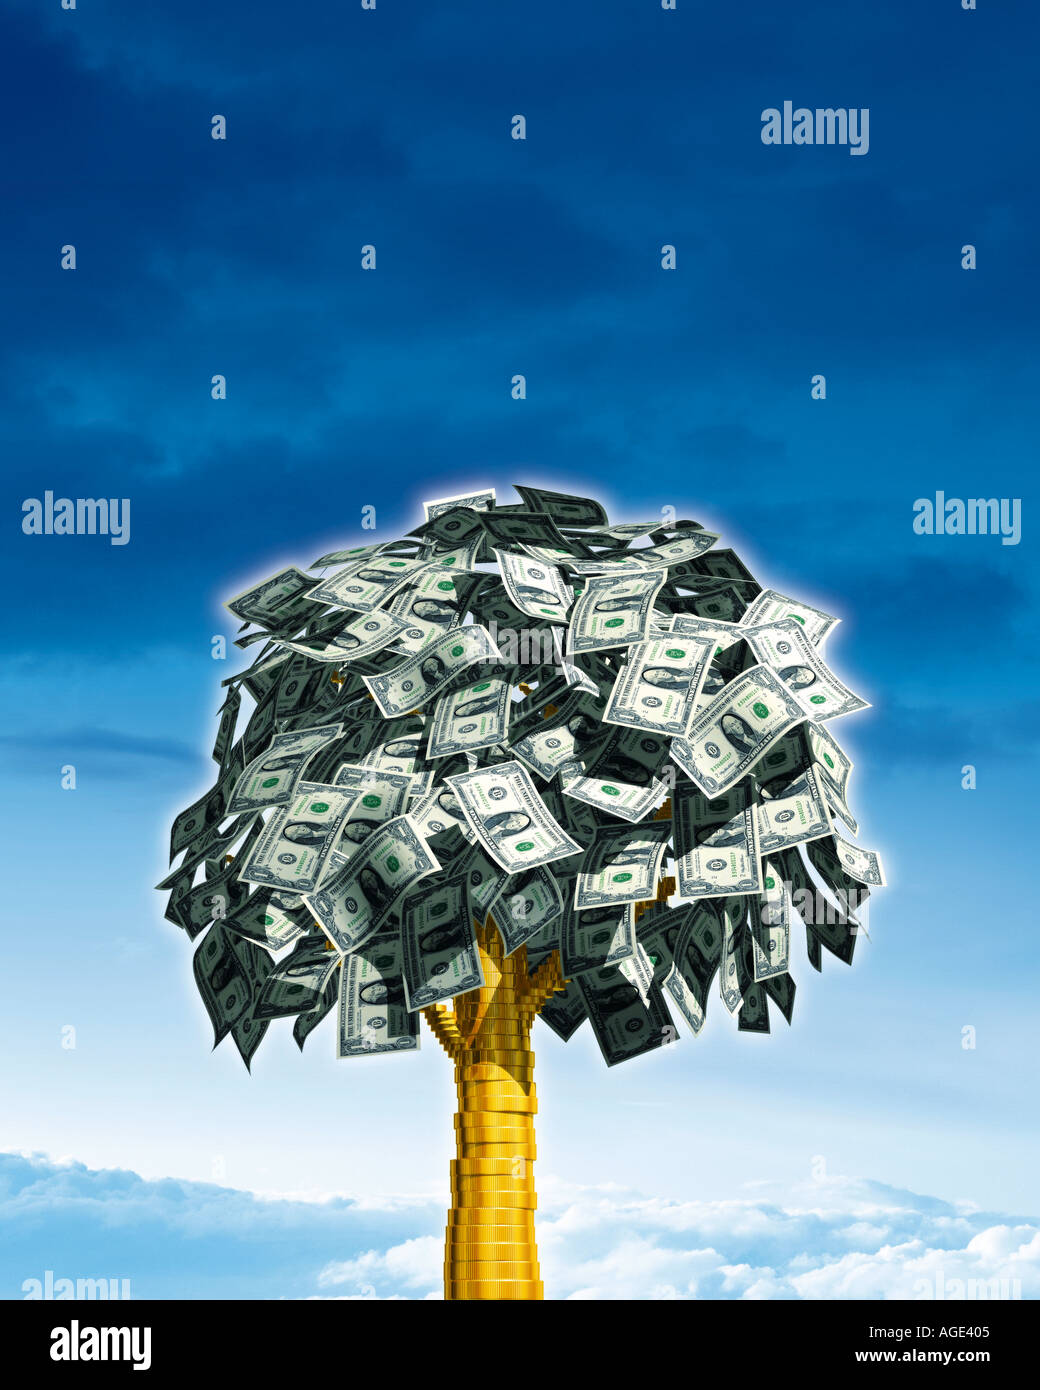 Money grows on trees Stock Photo